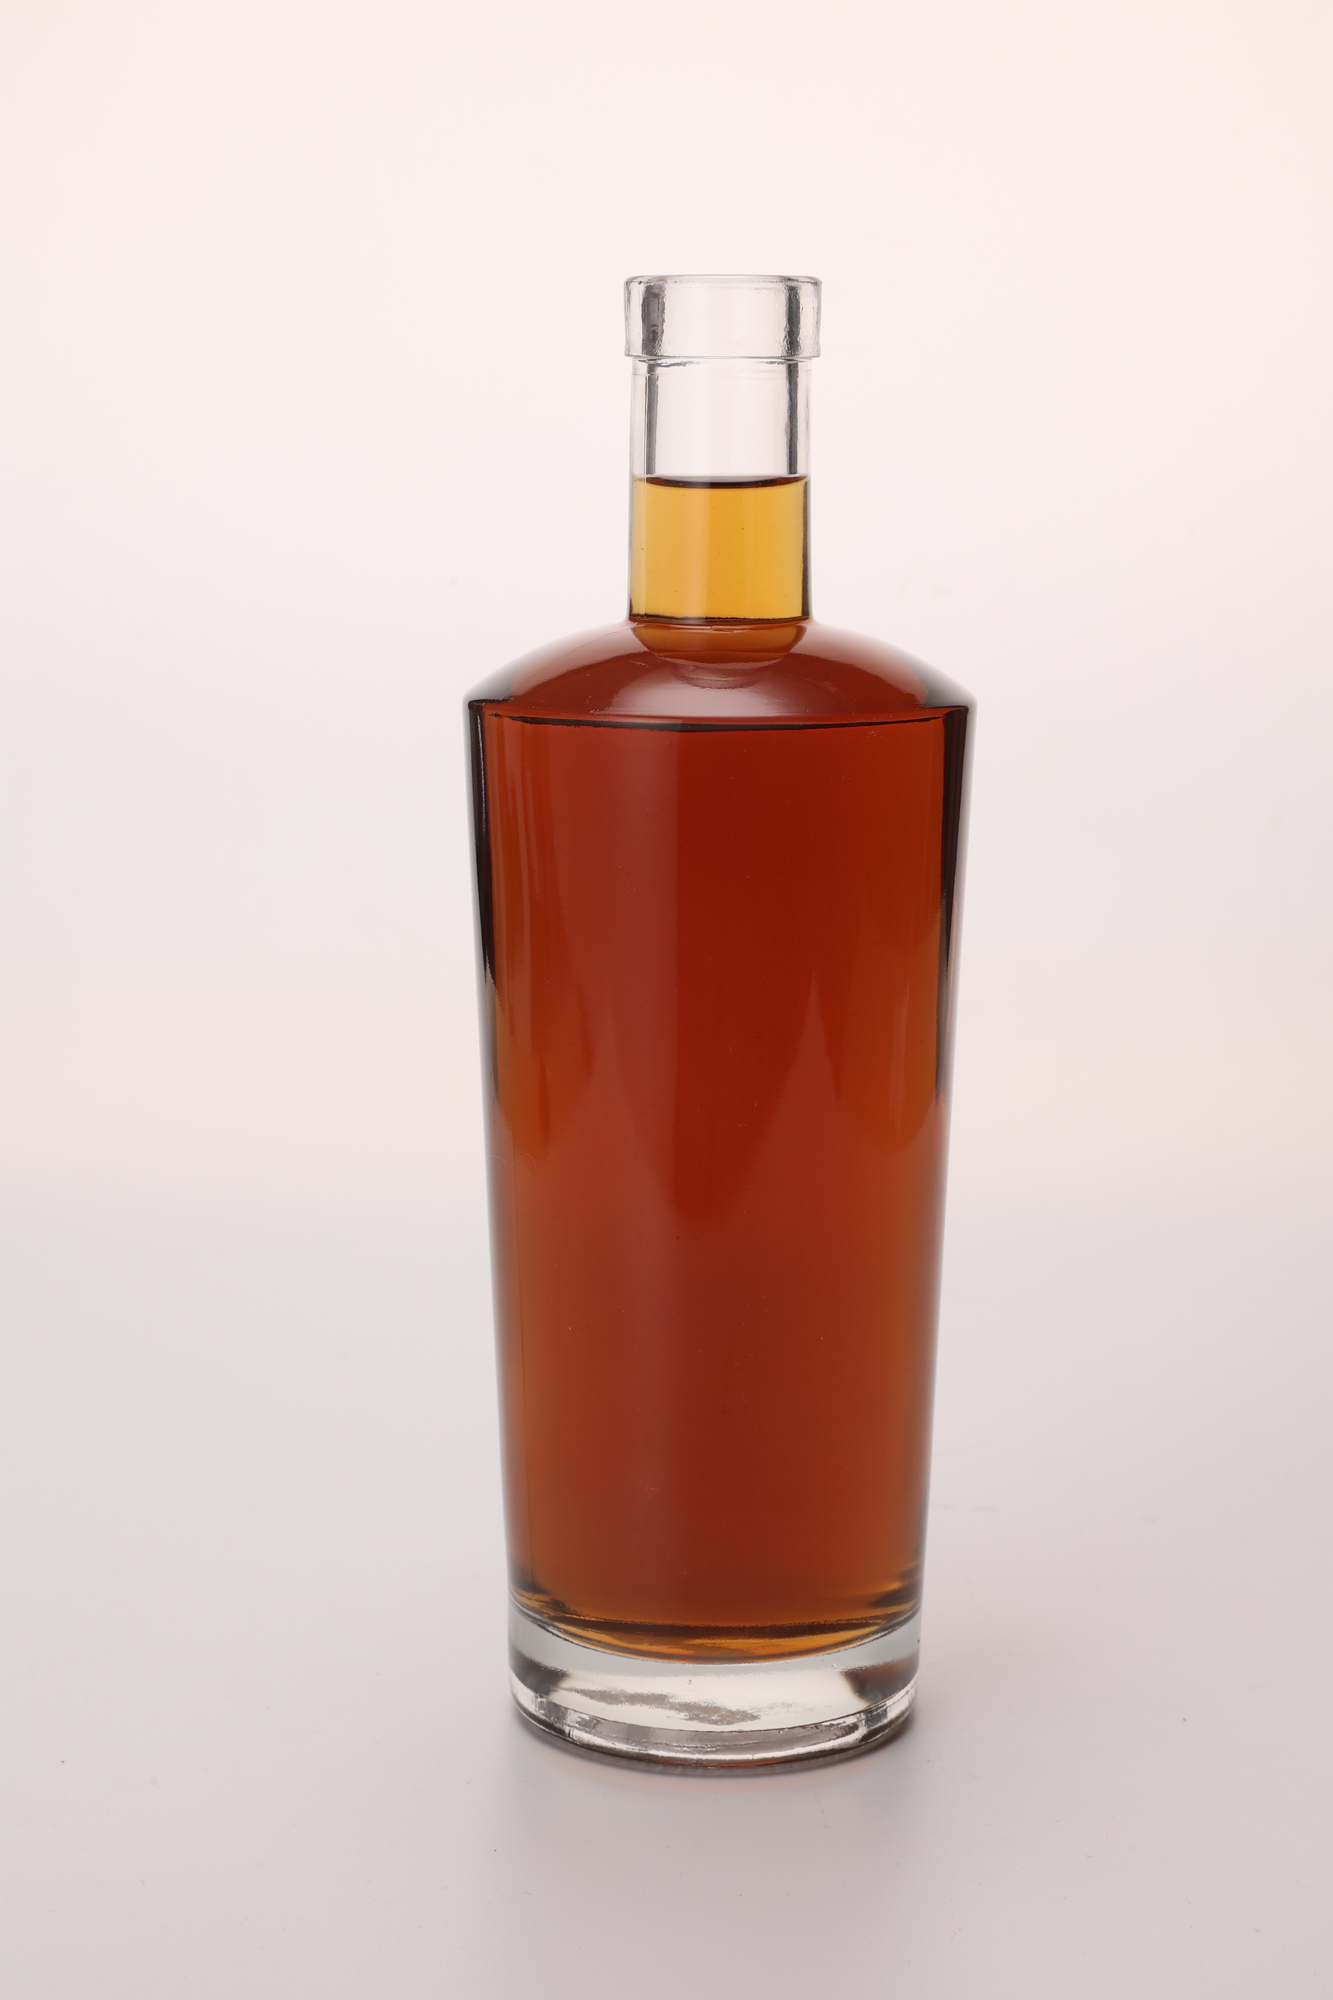 Vodka Liquor Gin Rum Tequila Whisky Brandy Spirit Glass Bottle With Cork